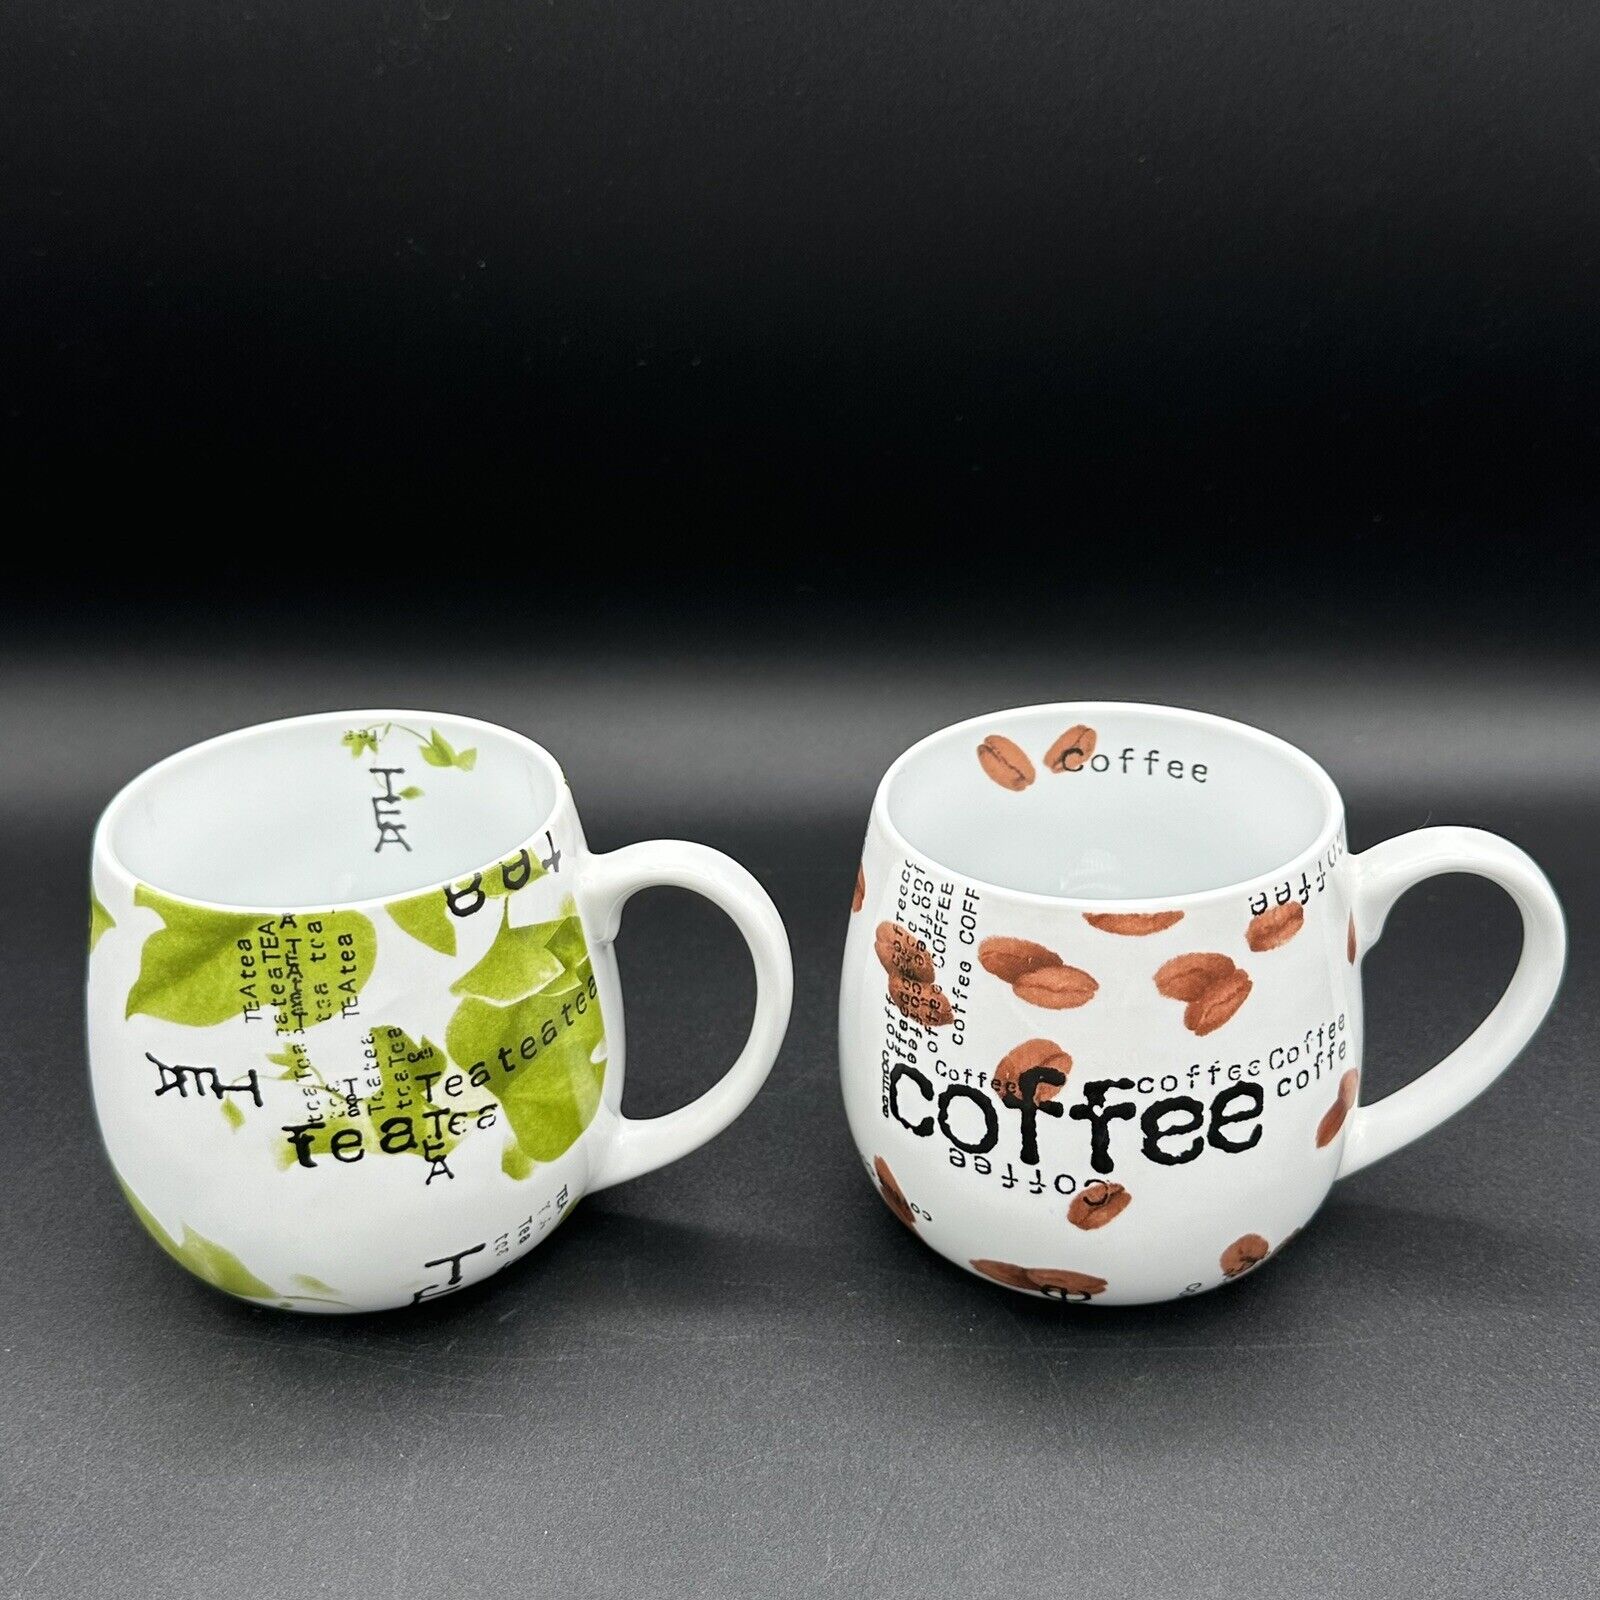 Konitz Germany Coffee And Tea Mug 12 Oz Each Porcelain Whimsical And Fun